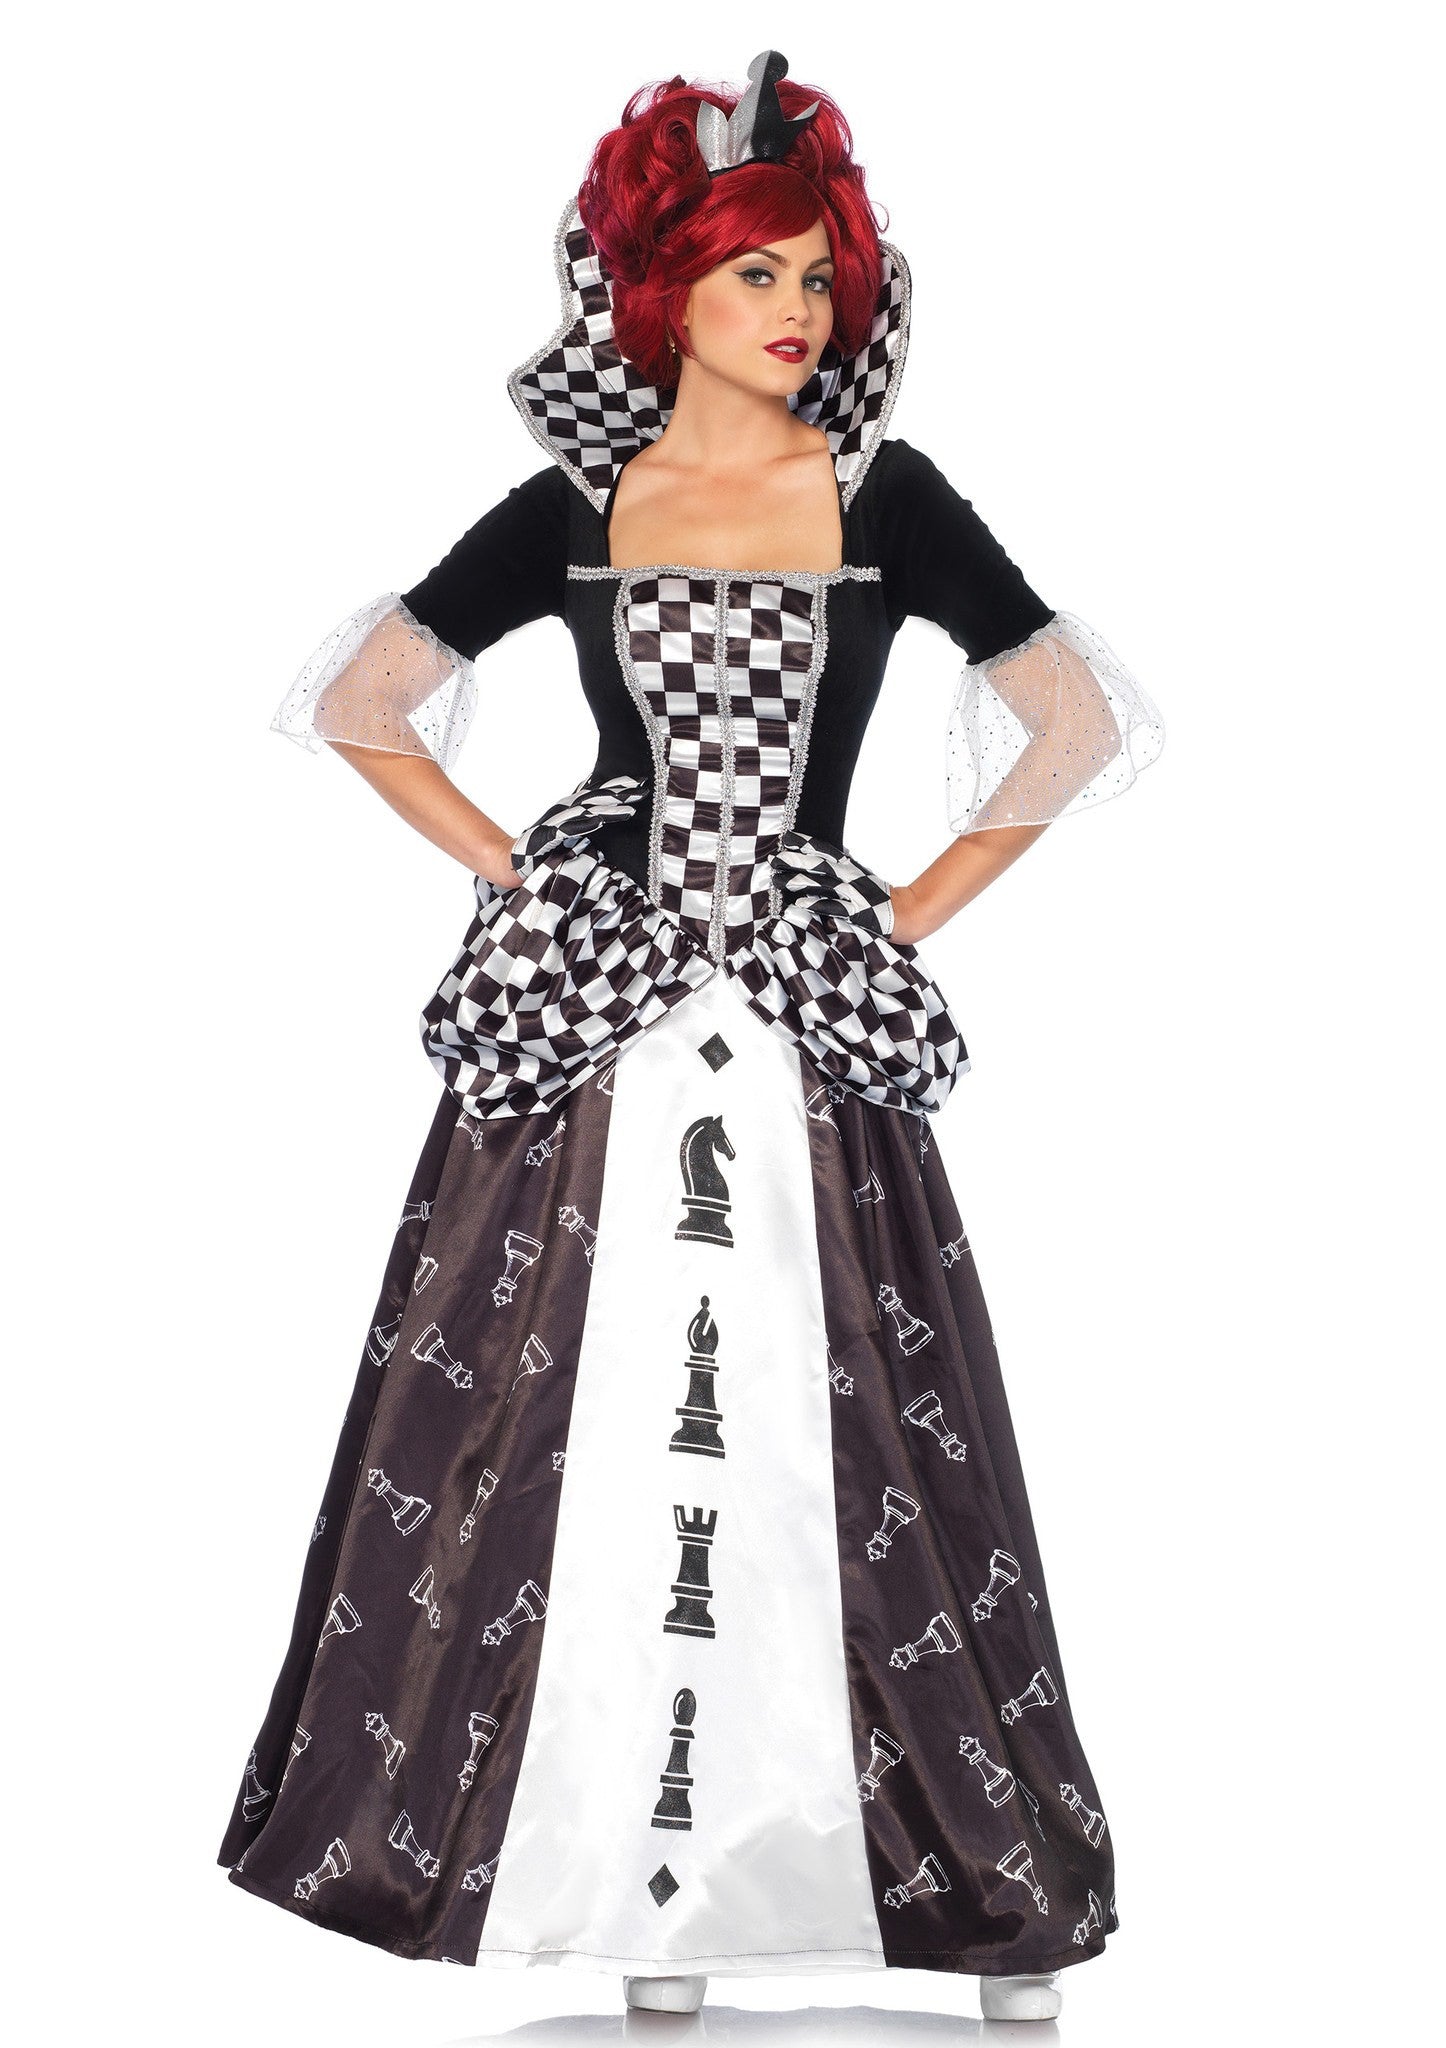 Costume - Wonderland Chess Queen Costume